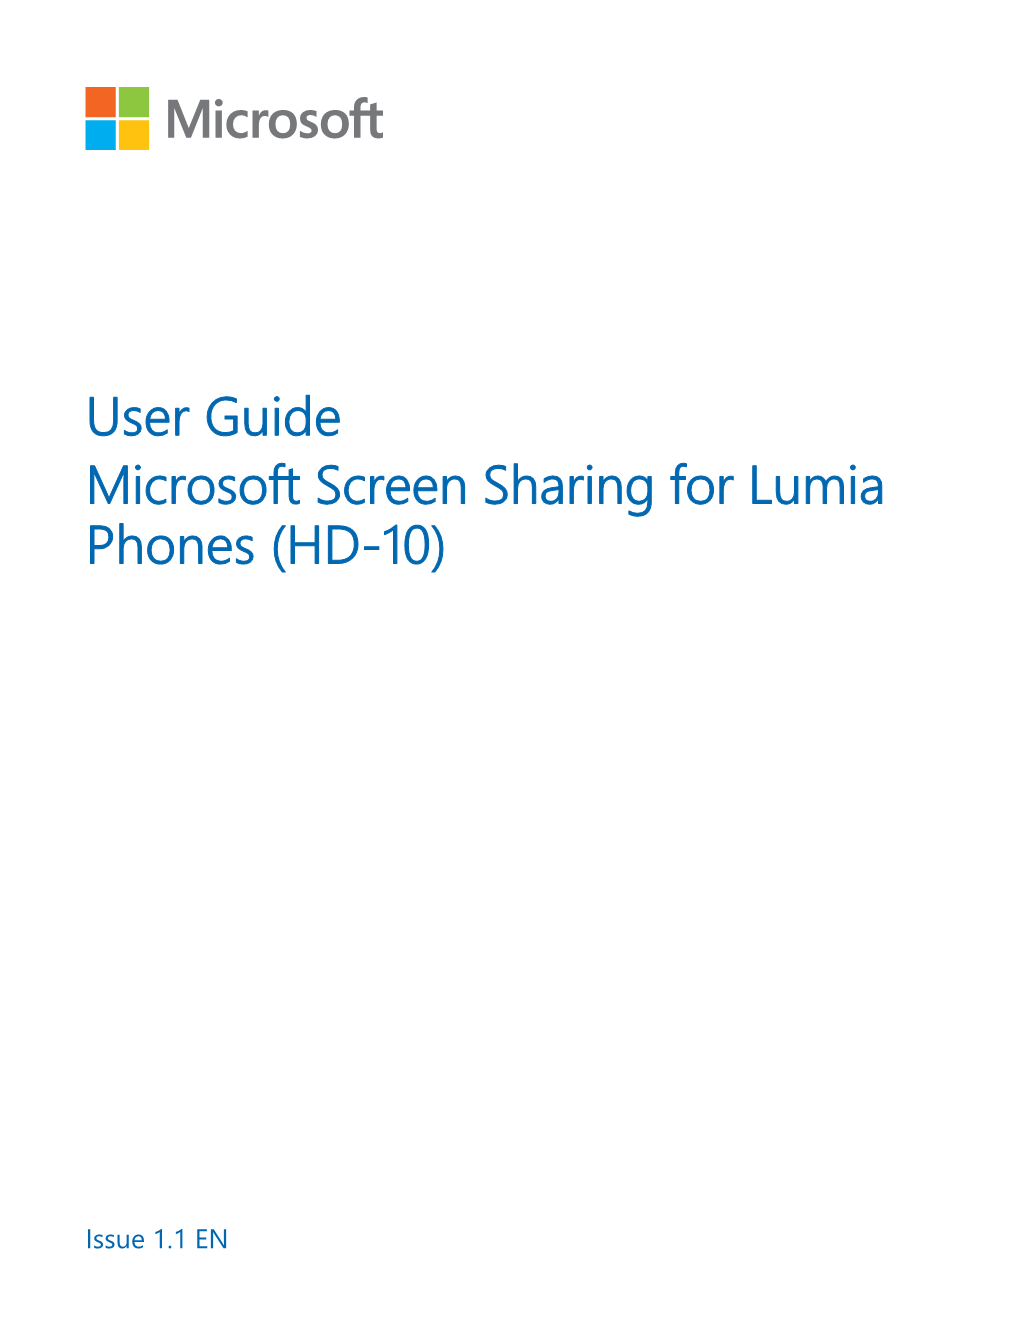 Microsoft Screen Sharing for Lumia Phones (HD-10)